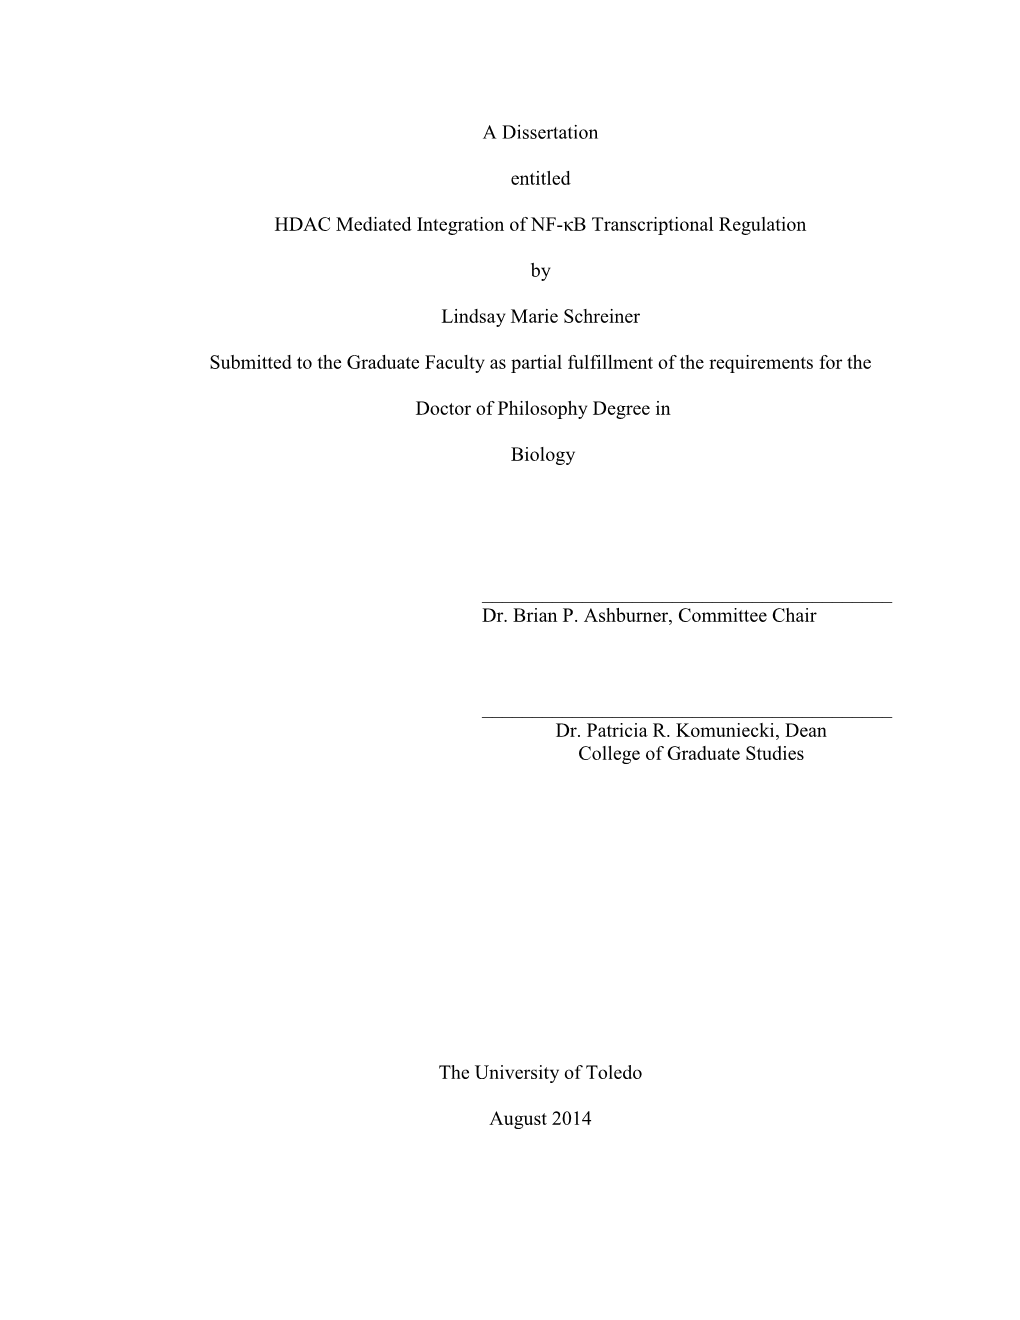 A Dissertation Entitled HDAC Mediated Integration of NF-Κb